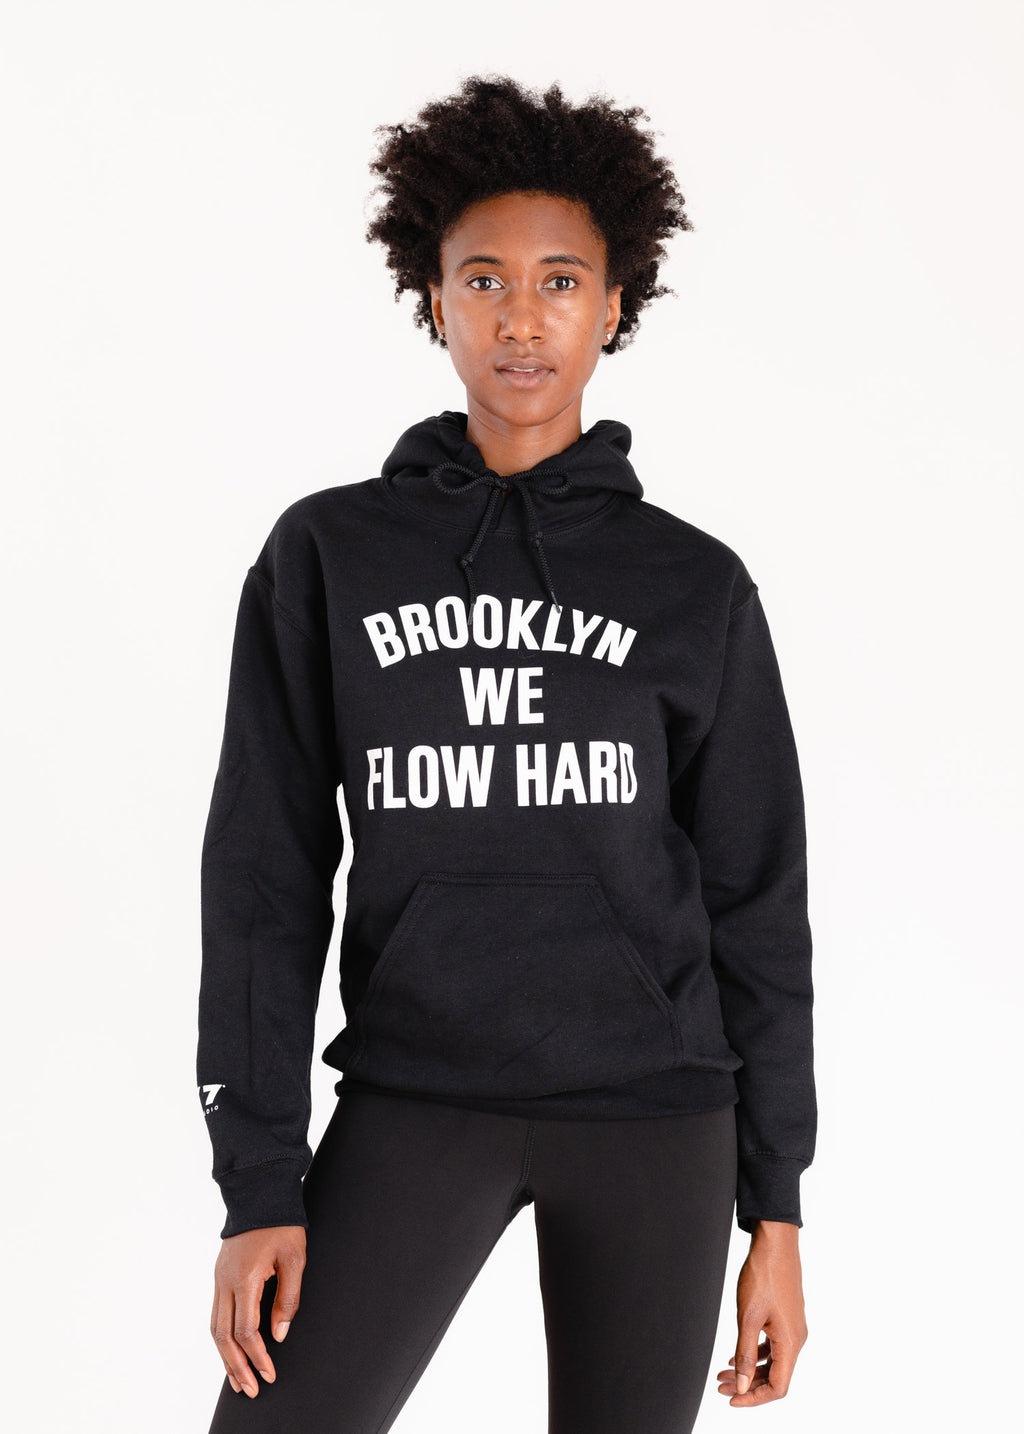 Brooklyn We Flow Hard Hooded Pullover